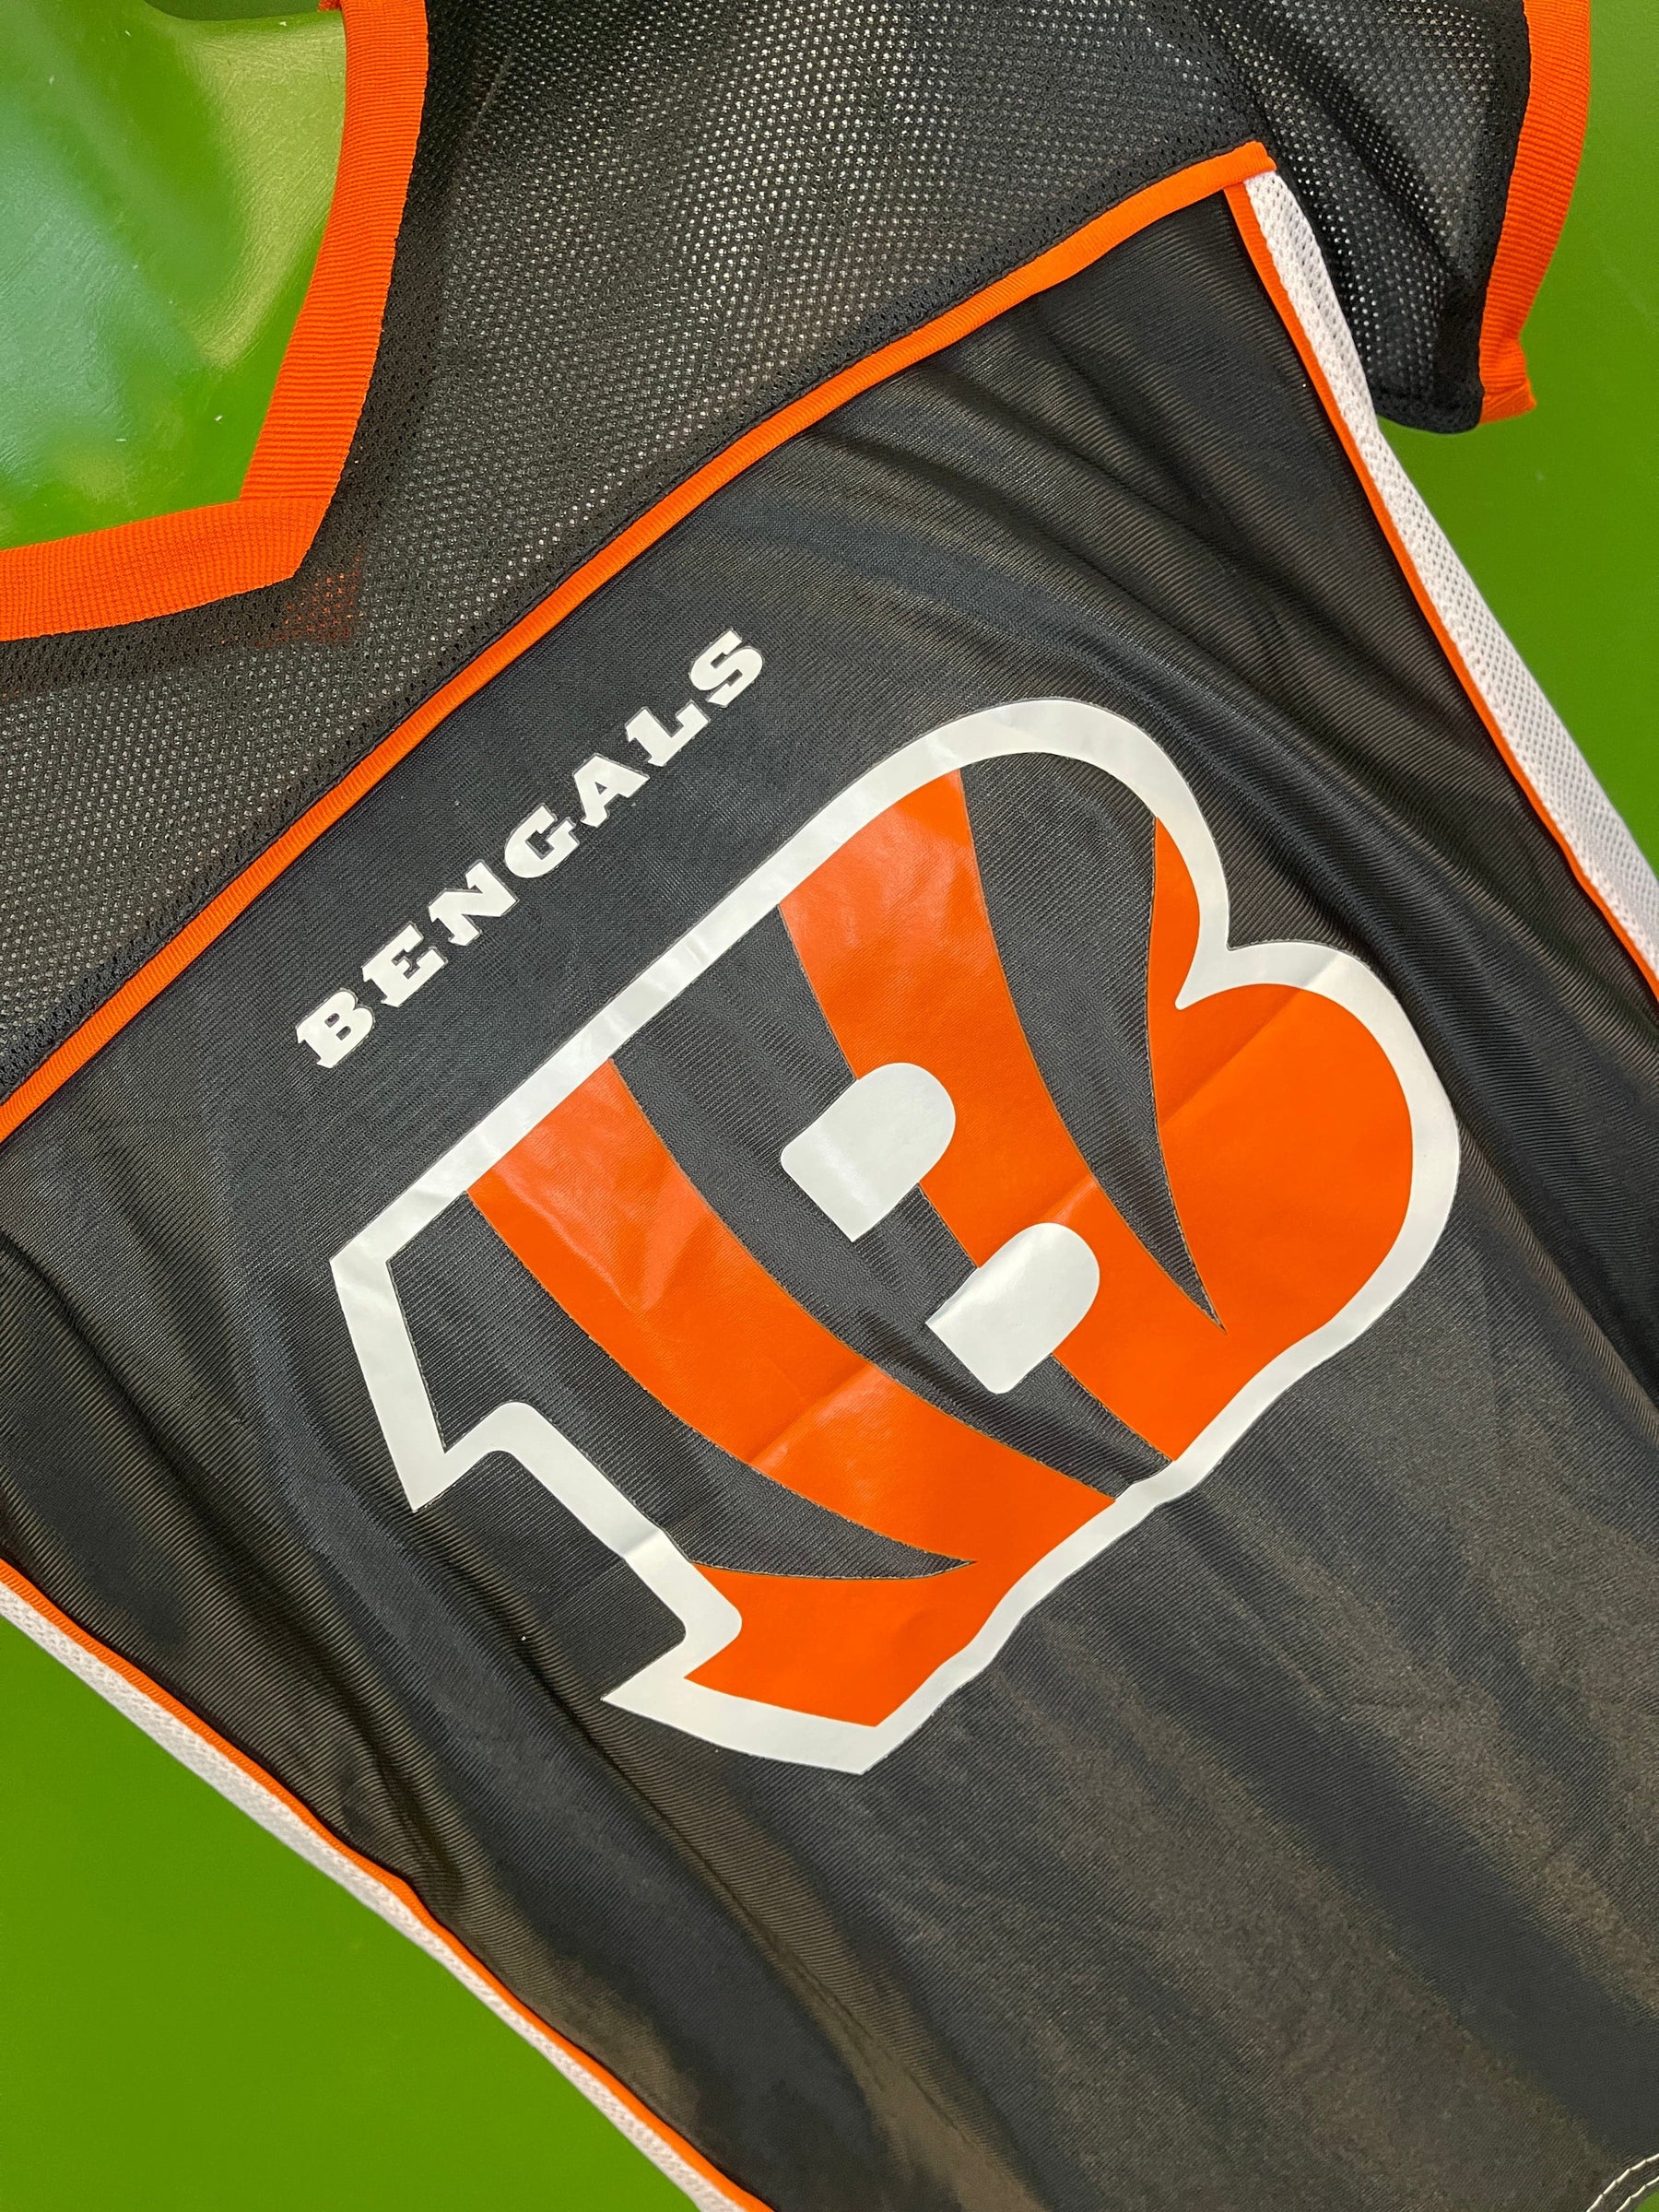 NFL Cincinnati Bengals Authentic Kids' Flag Football Shirt Youth Large